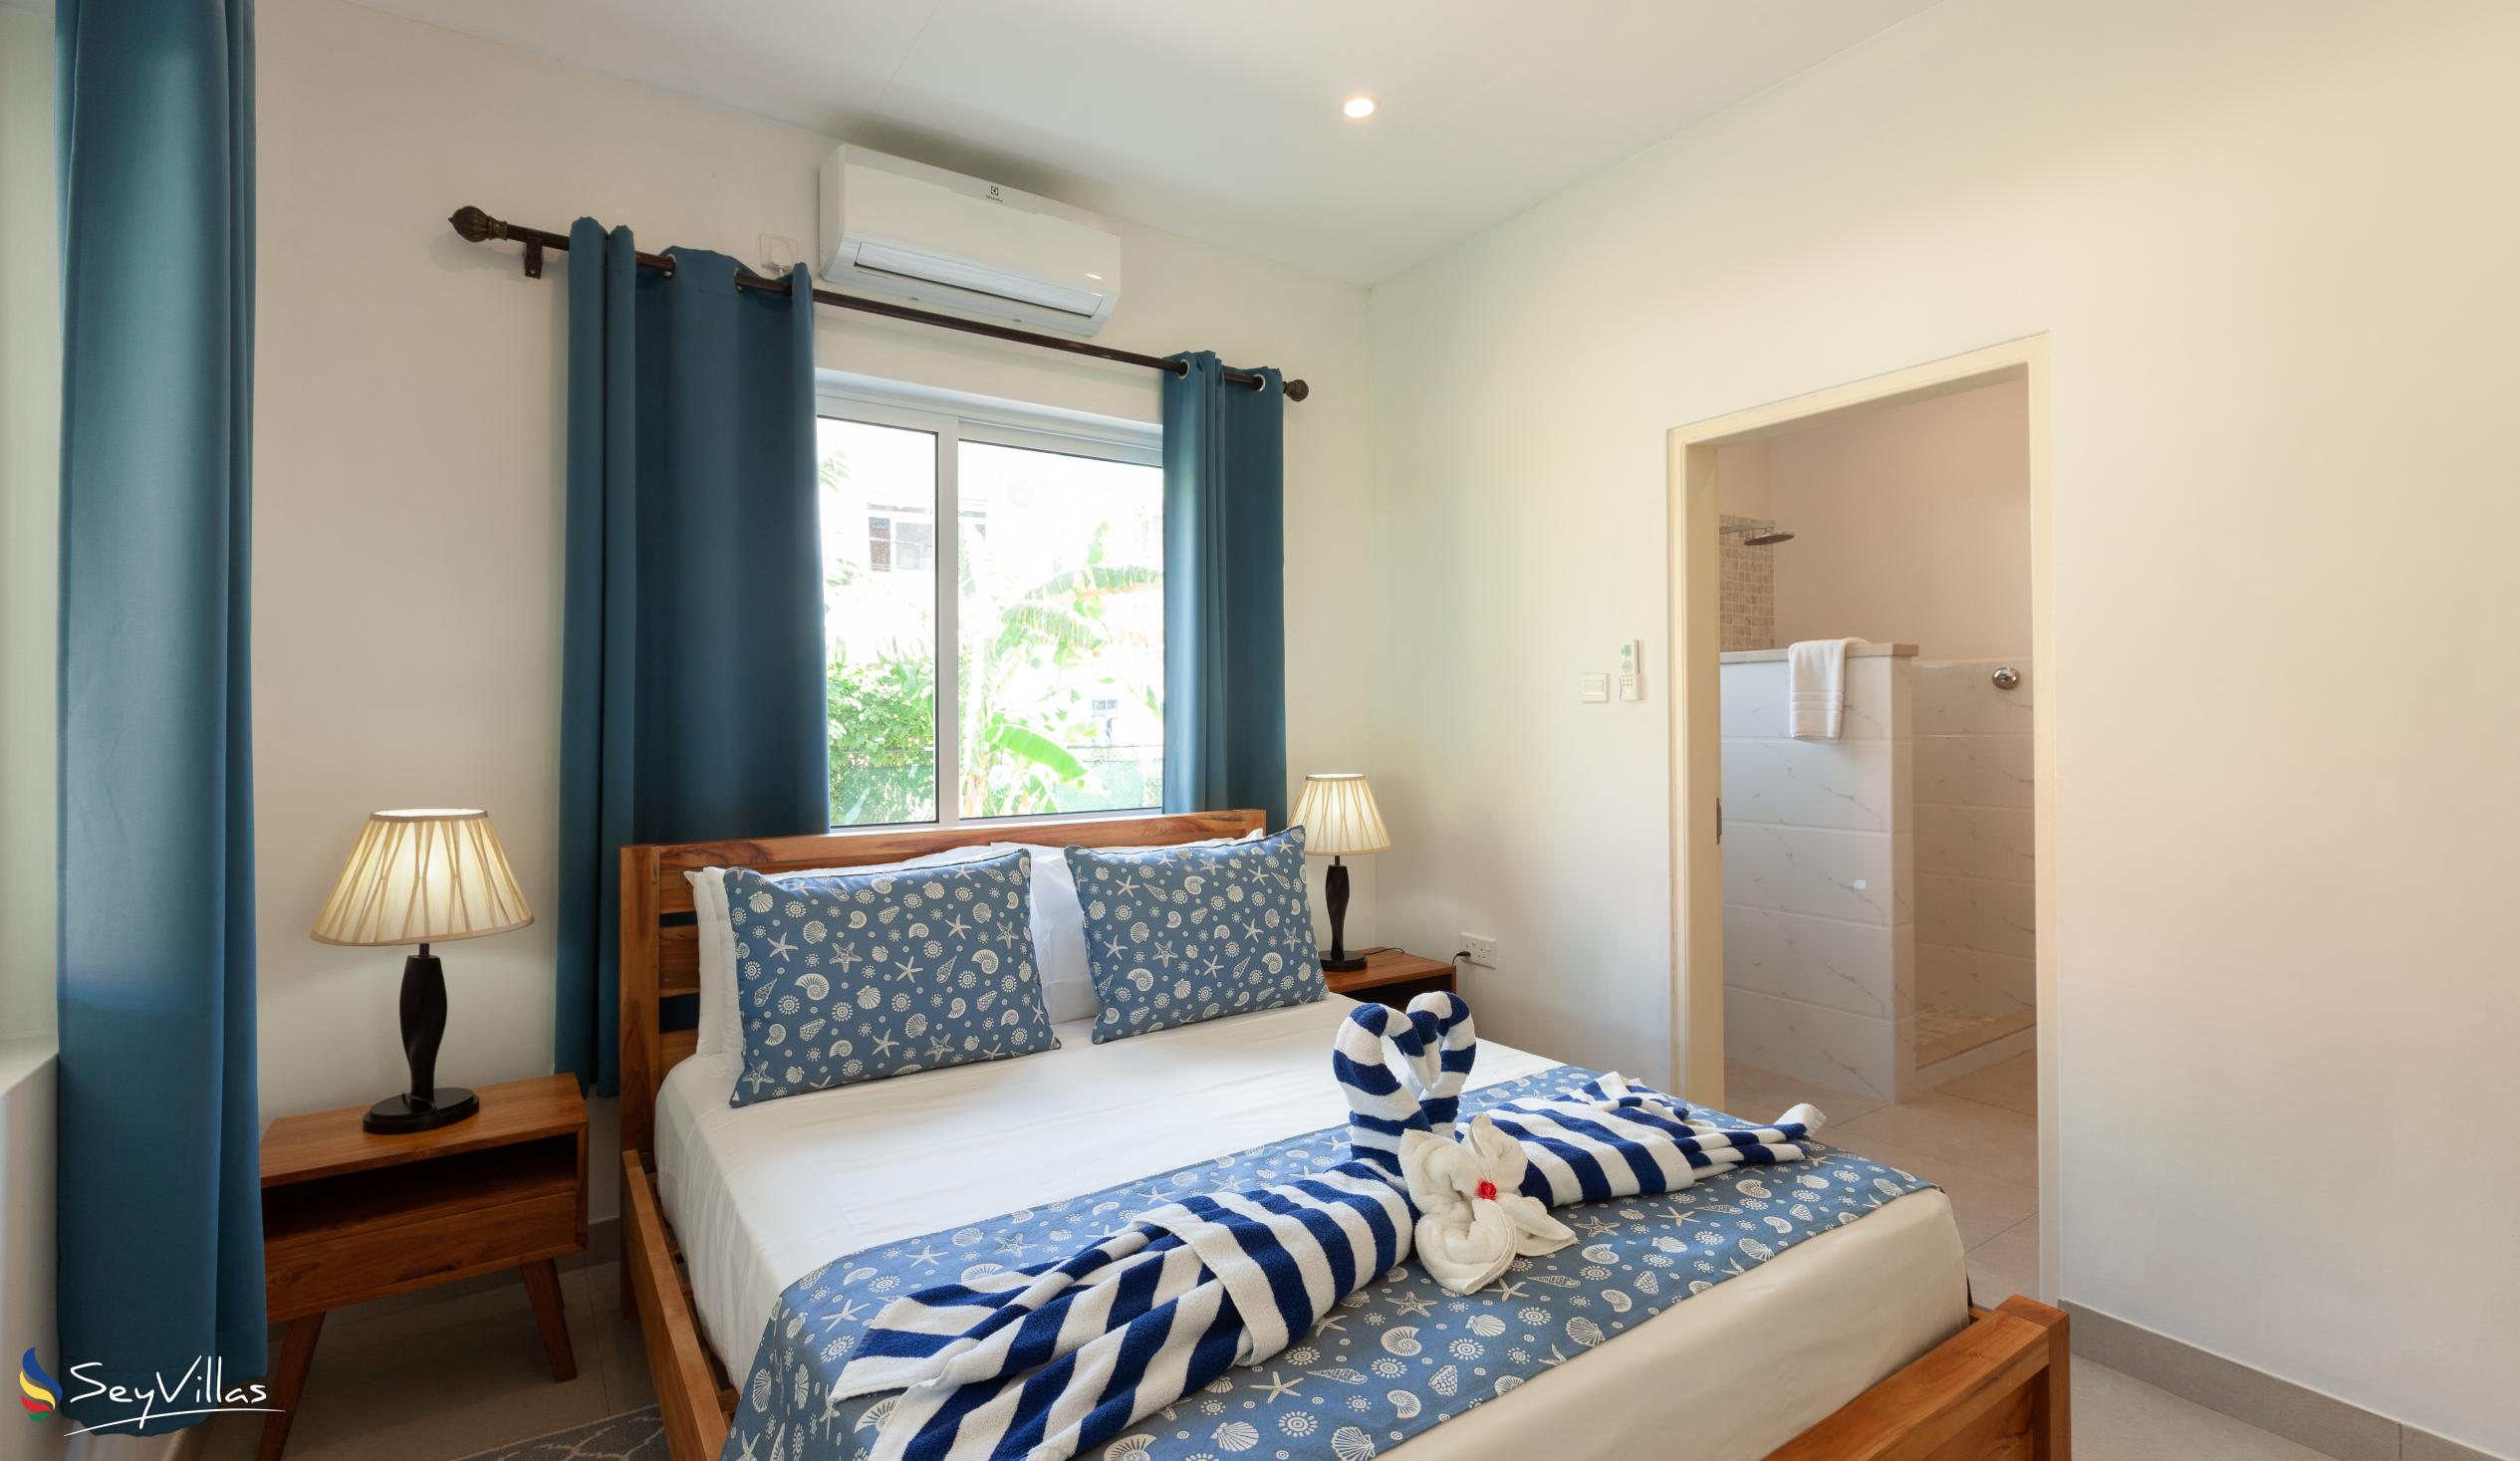 Foto 35: Maison Marie-Jeanne - Appartement 4 chambres - Praslin (Seychelles)